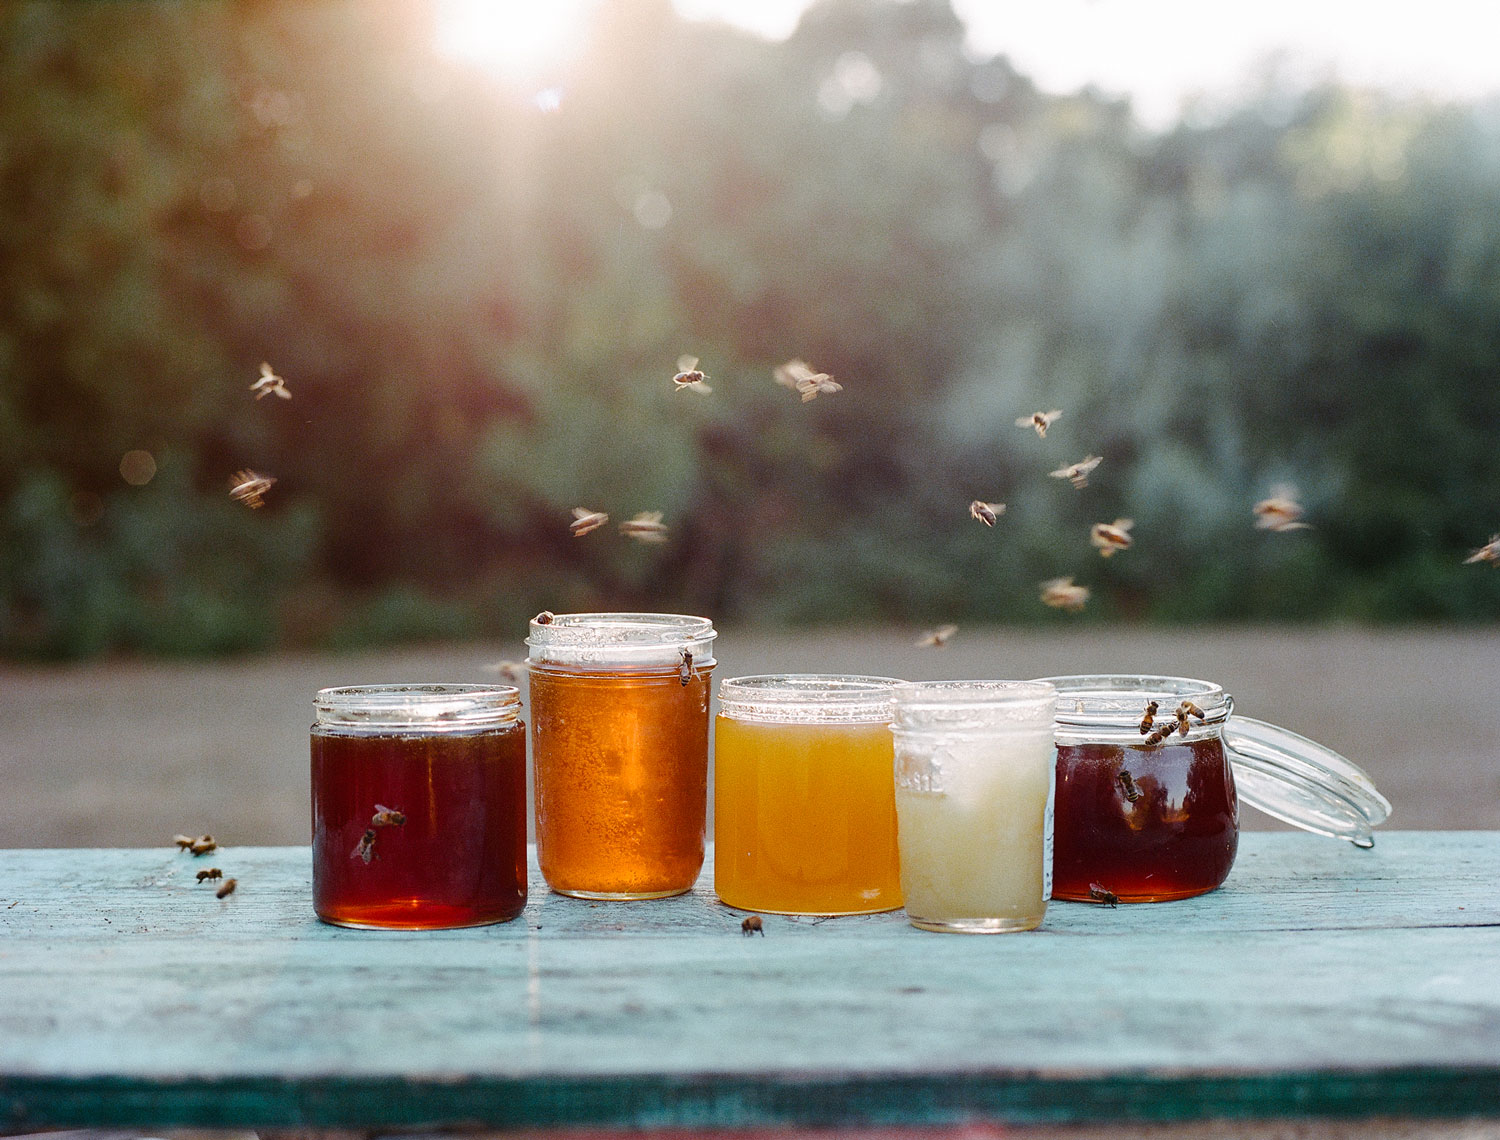 Local honeys in jars